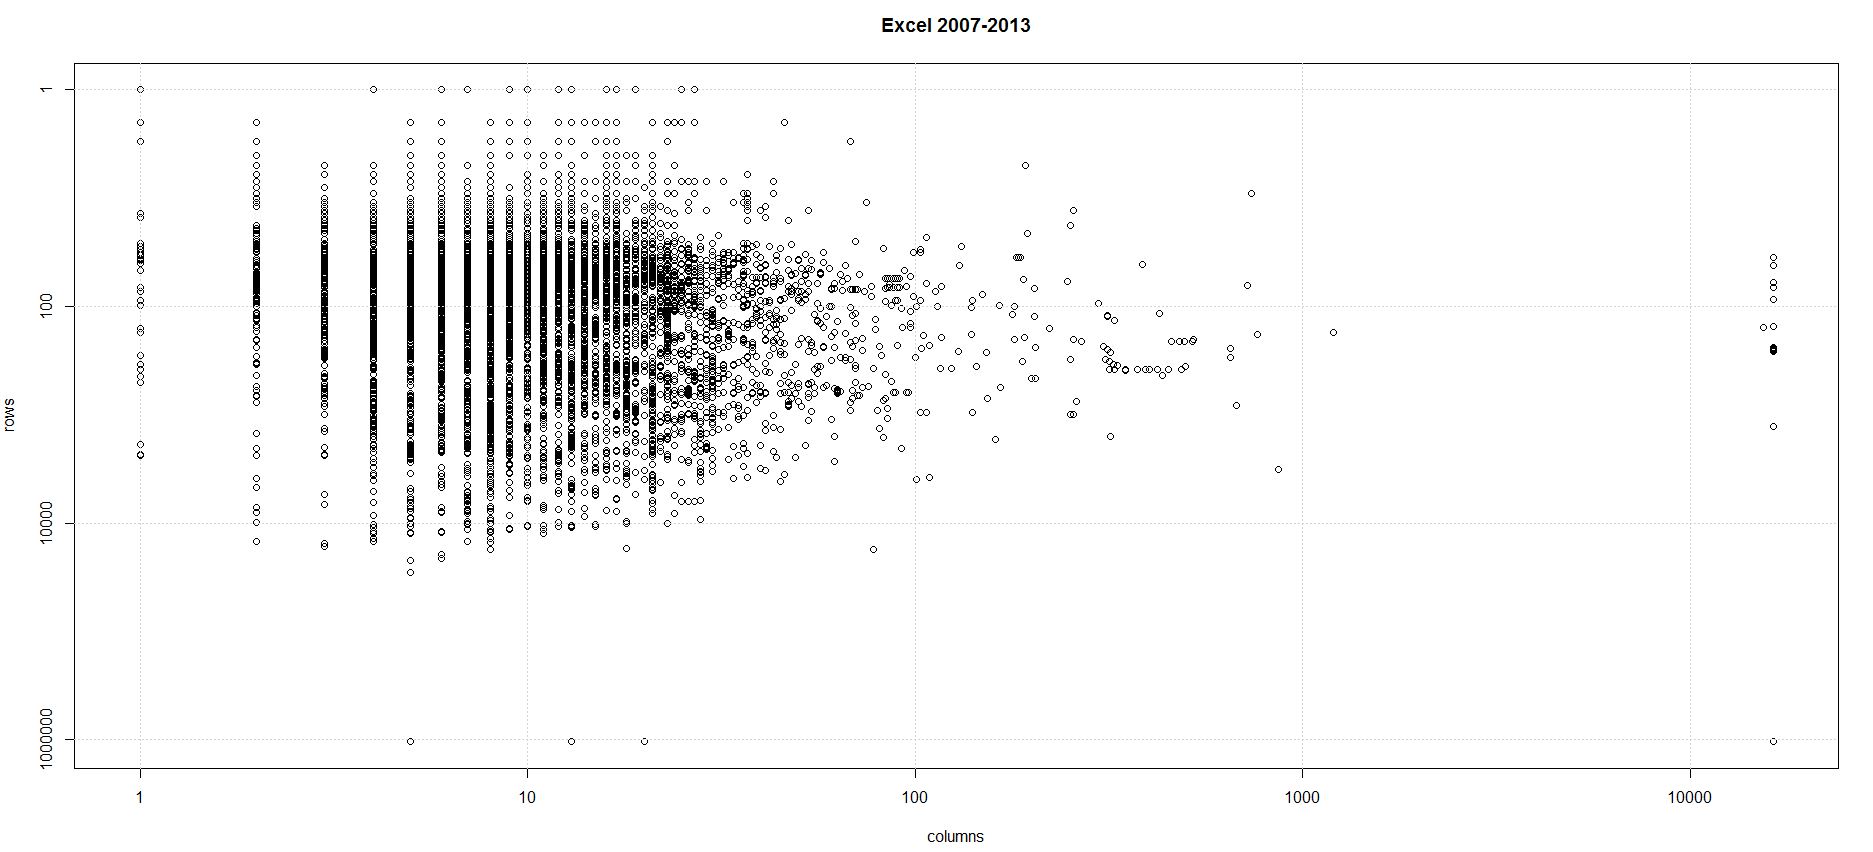 2007-2013 last row vs last col, log scale